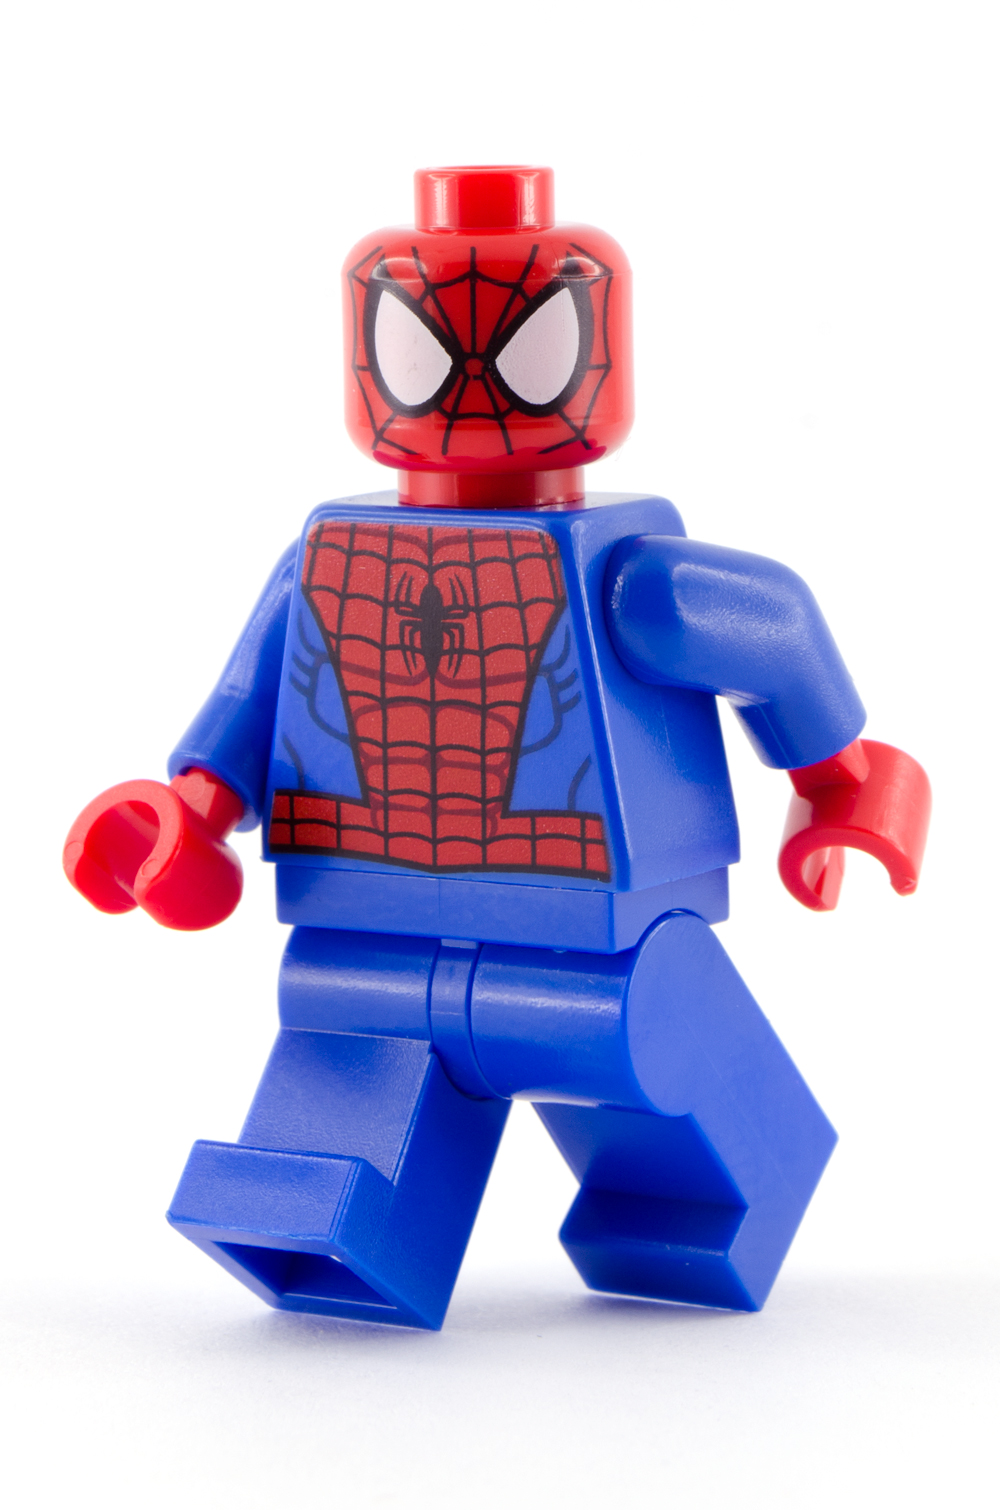 LEGO Spider Man Minifigure ministryofminifigureswordpresscom